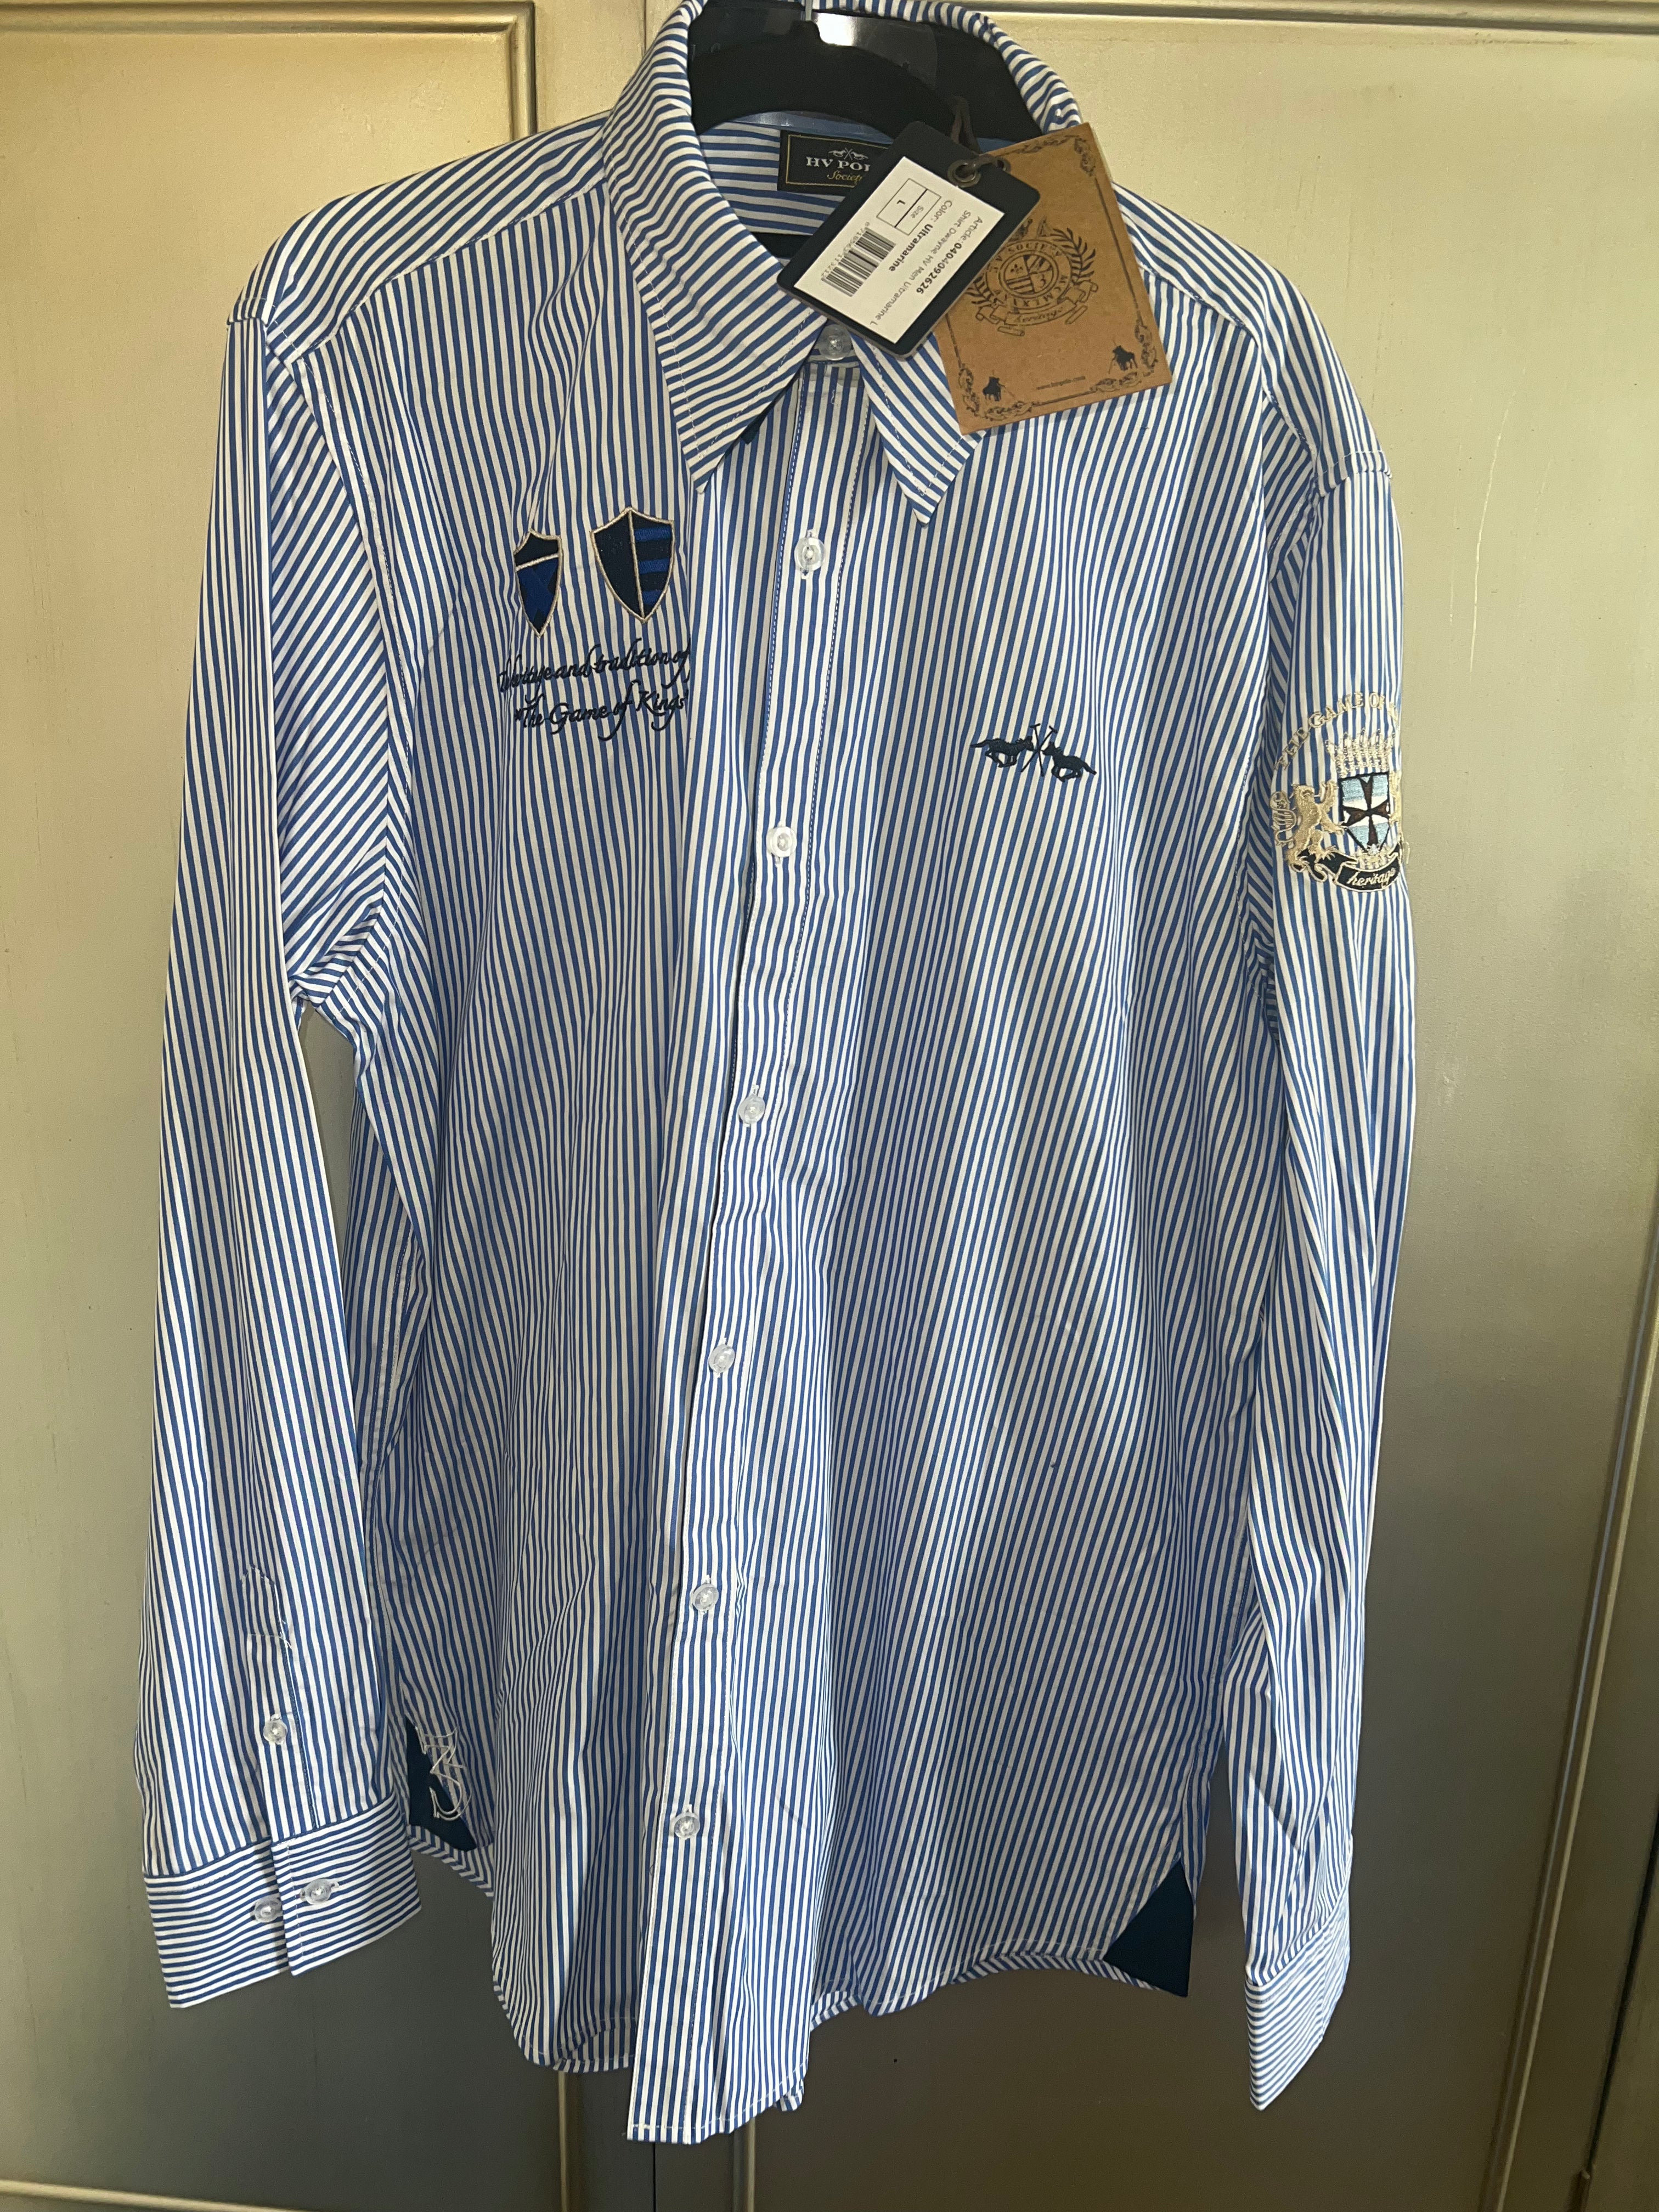 Hv Polo Ultramarine Pinstripe Men’s Large Shirt Rrp £109